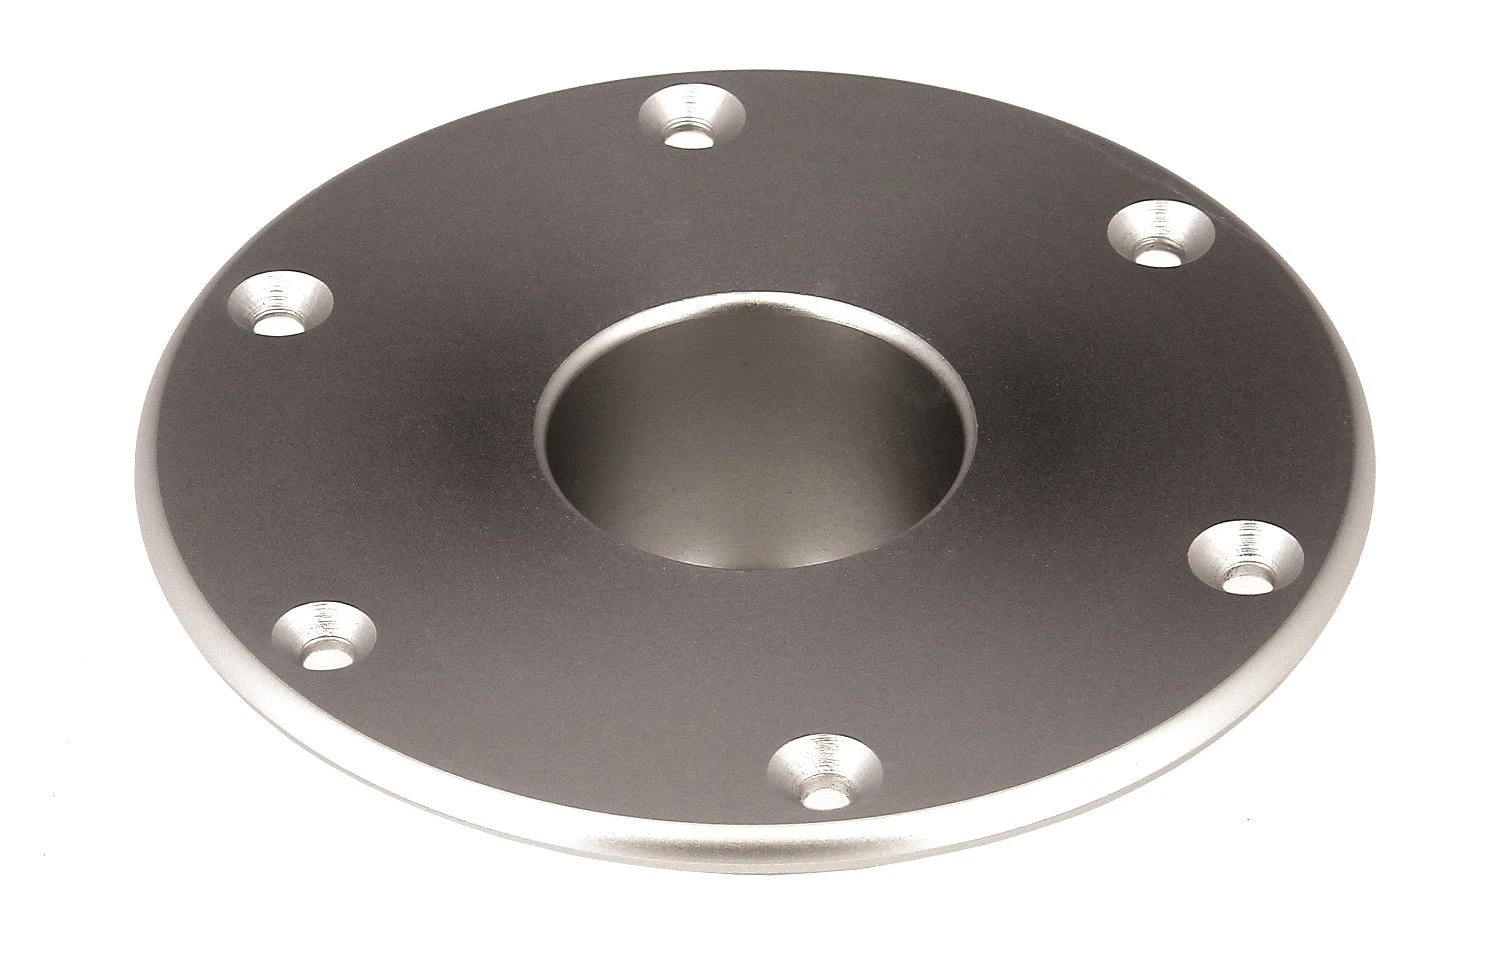 VETUS PT68 pied de table en aluminium amovible 685 mm